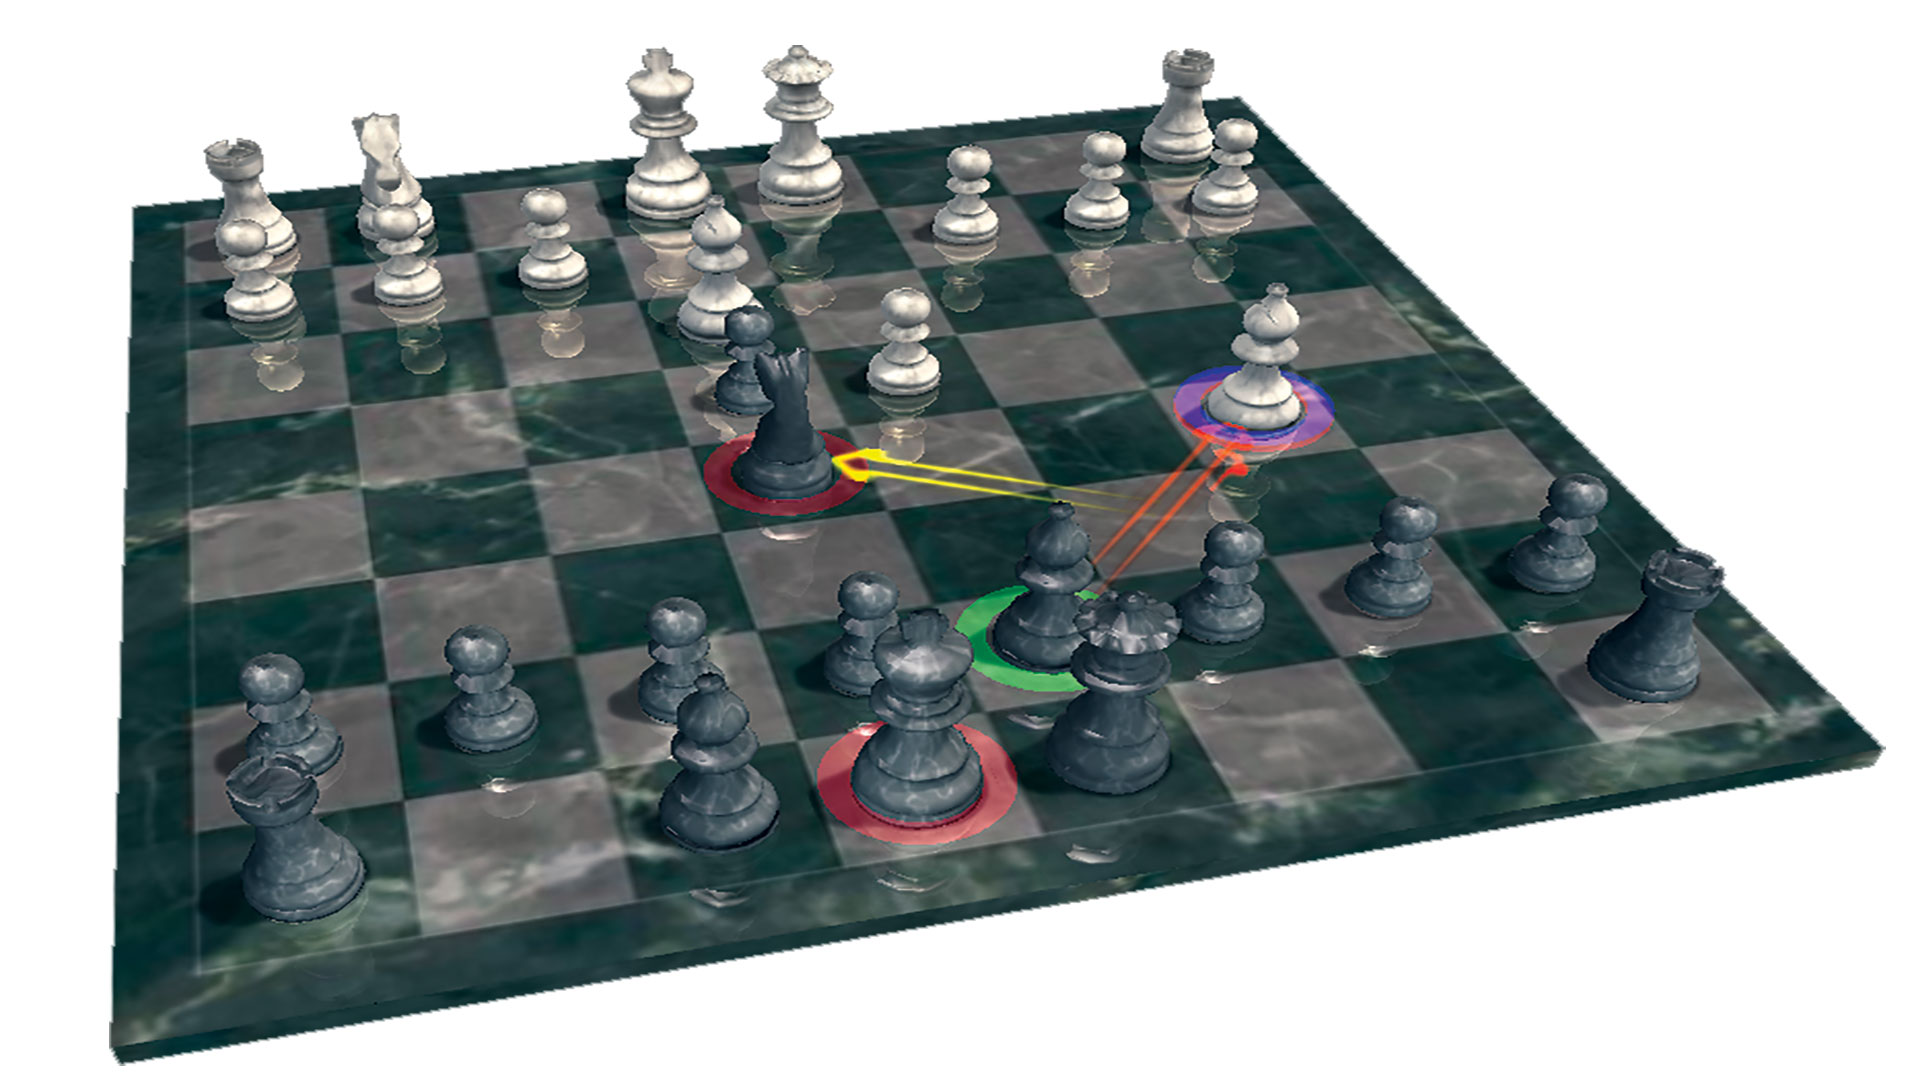 fritz chess analysis online